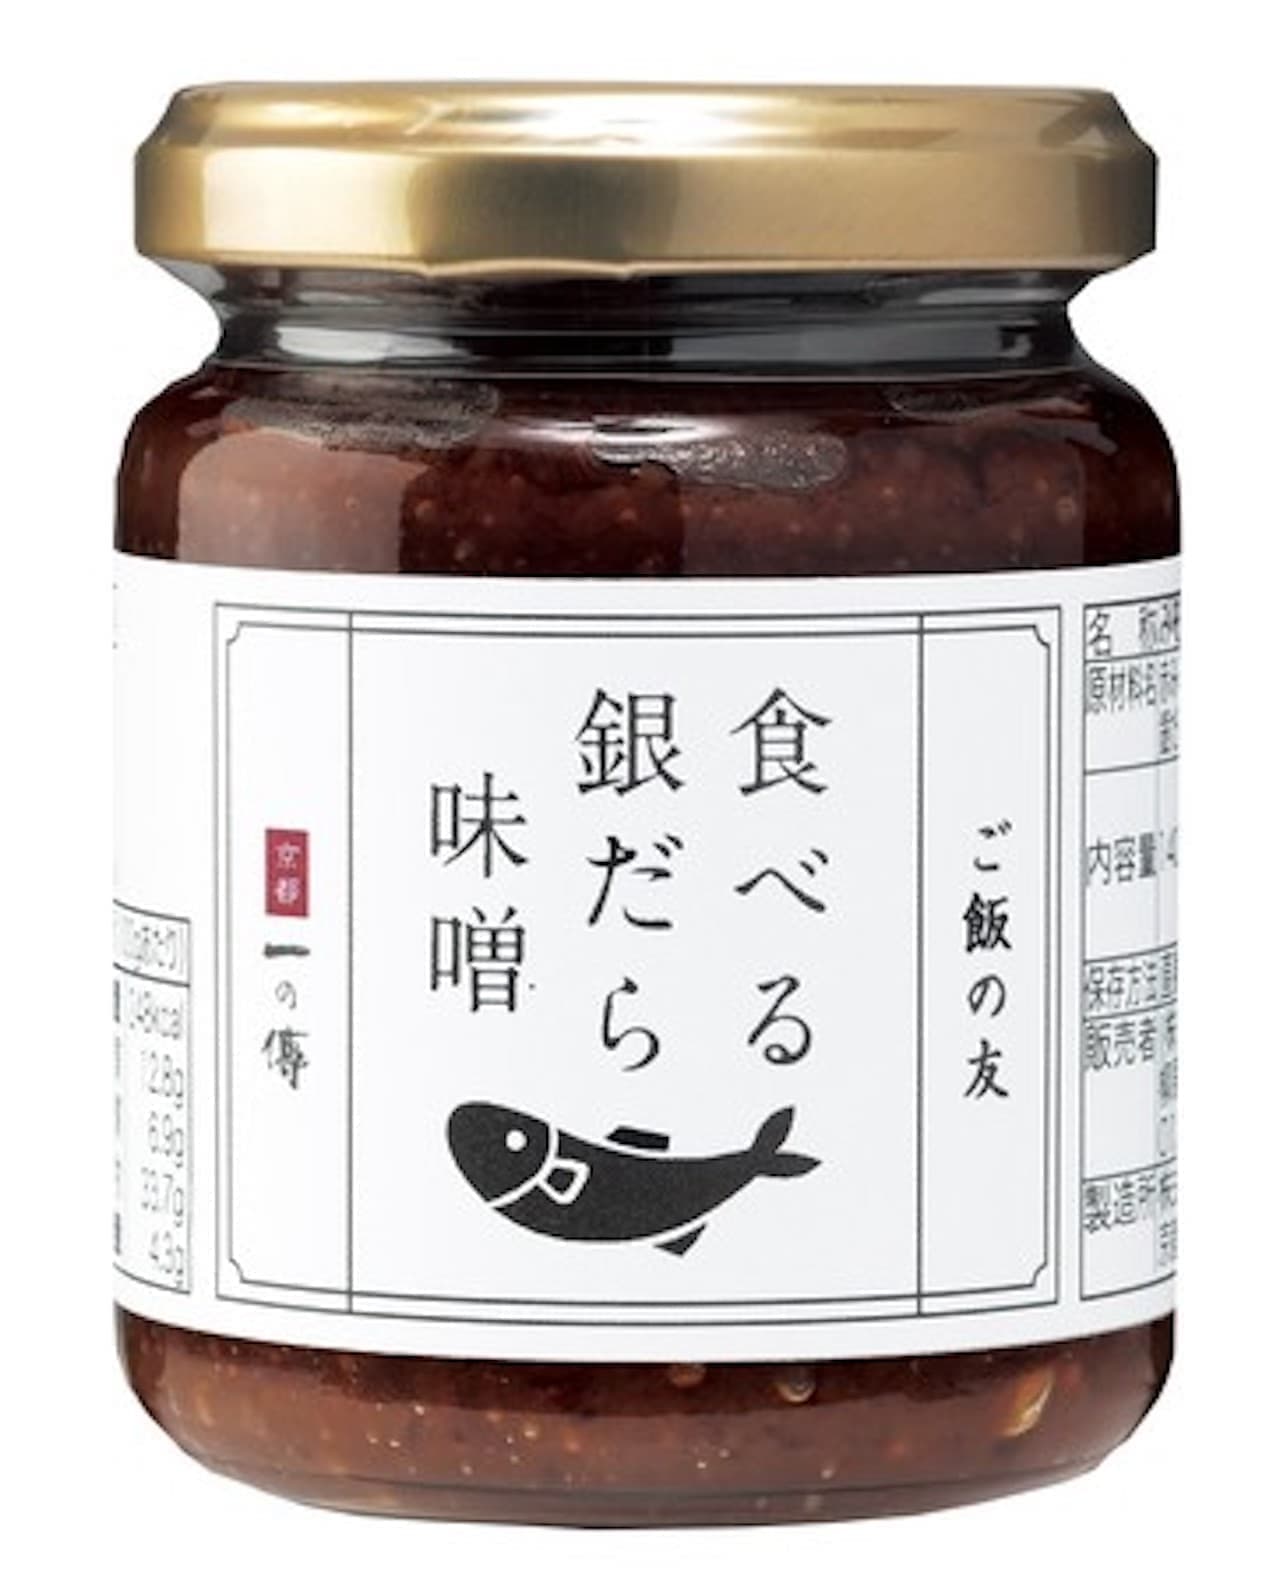 Rice Friend Series "Eating Sablefish Miso" from Kyoto Ichi no Den